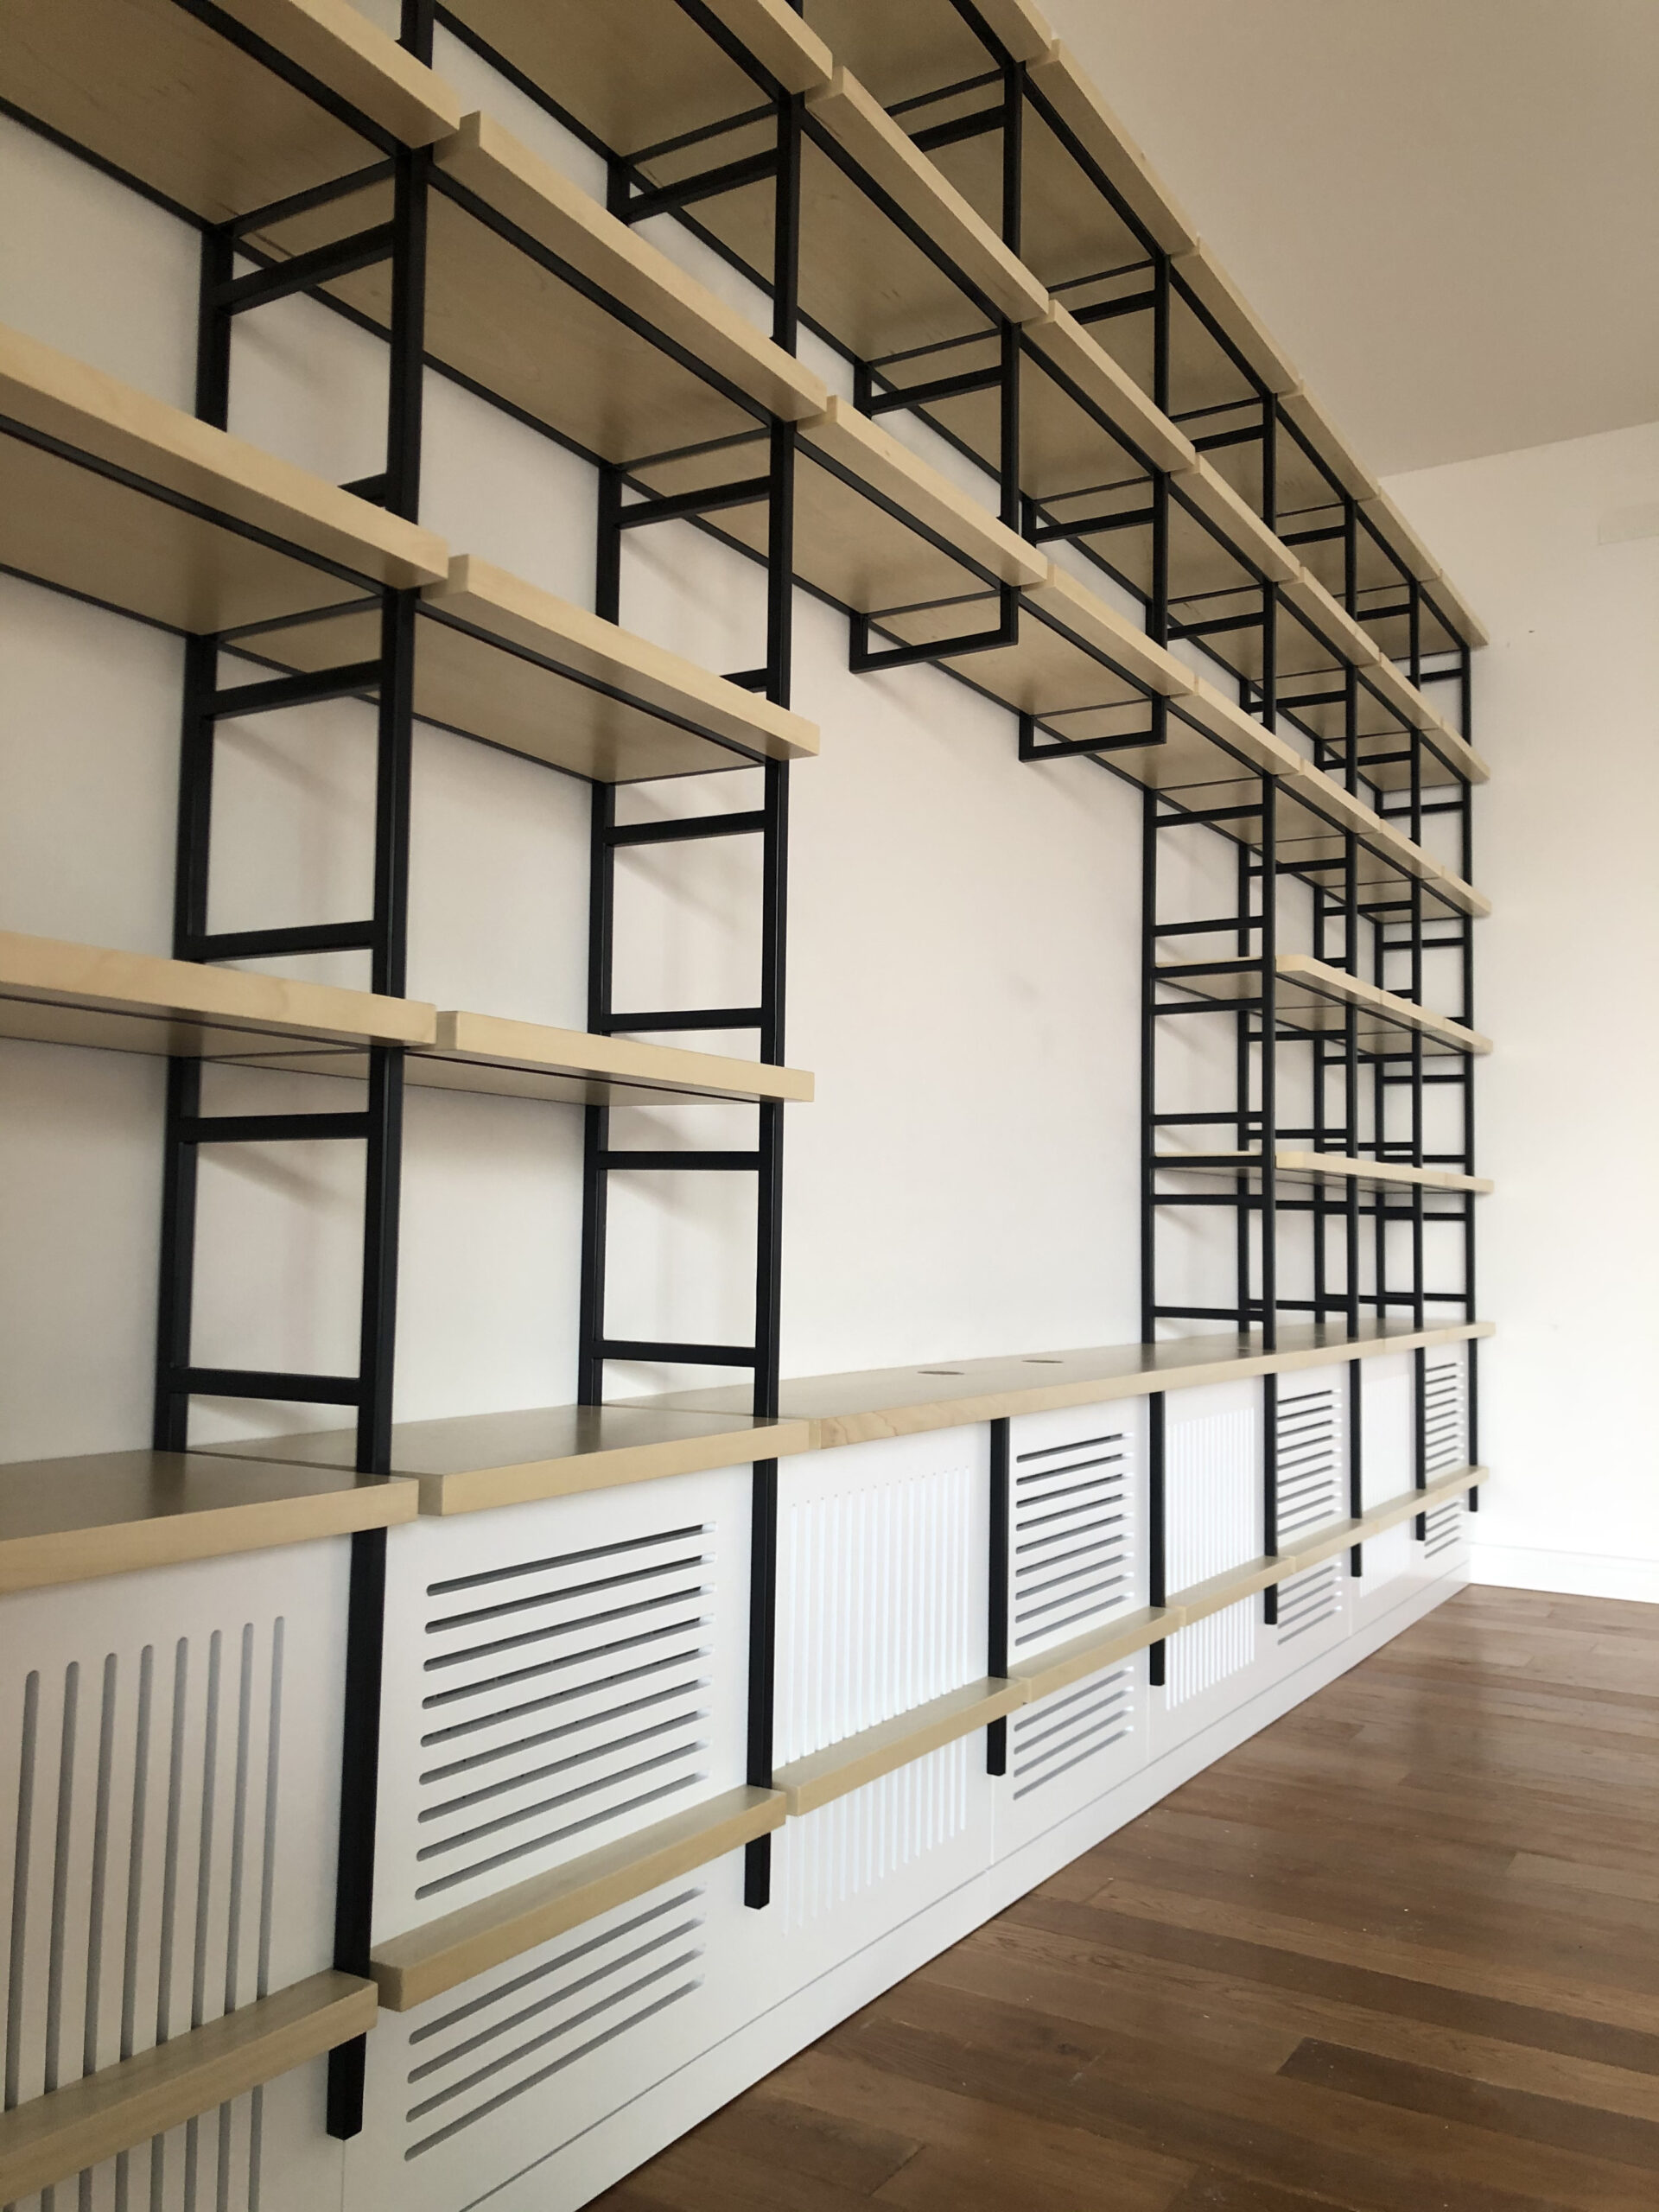 MDDM-Architects-Studio-Library-Bookshelves-furniture-product-design-steel-wood